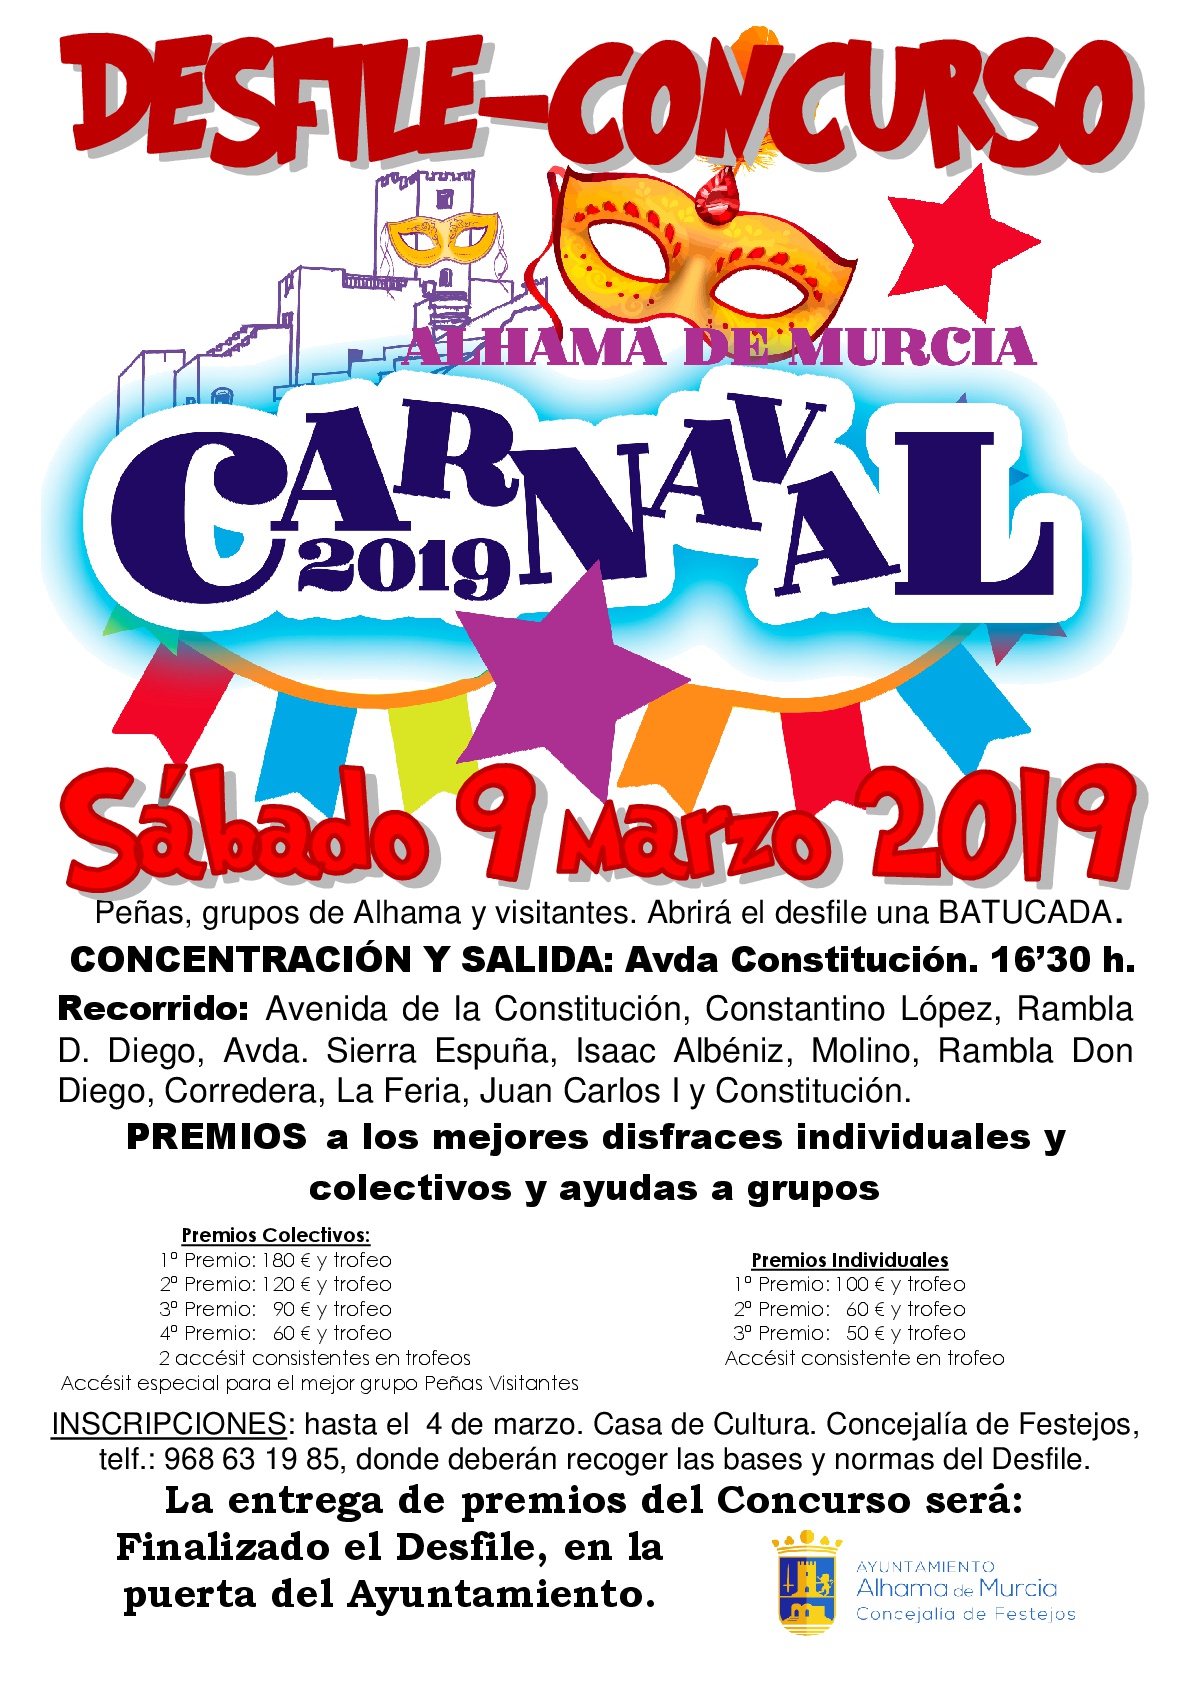 cartel-carnaval-2019-alhama de murcia-001 2.jpg